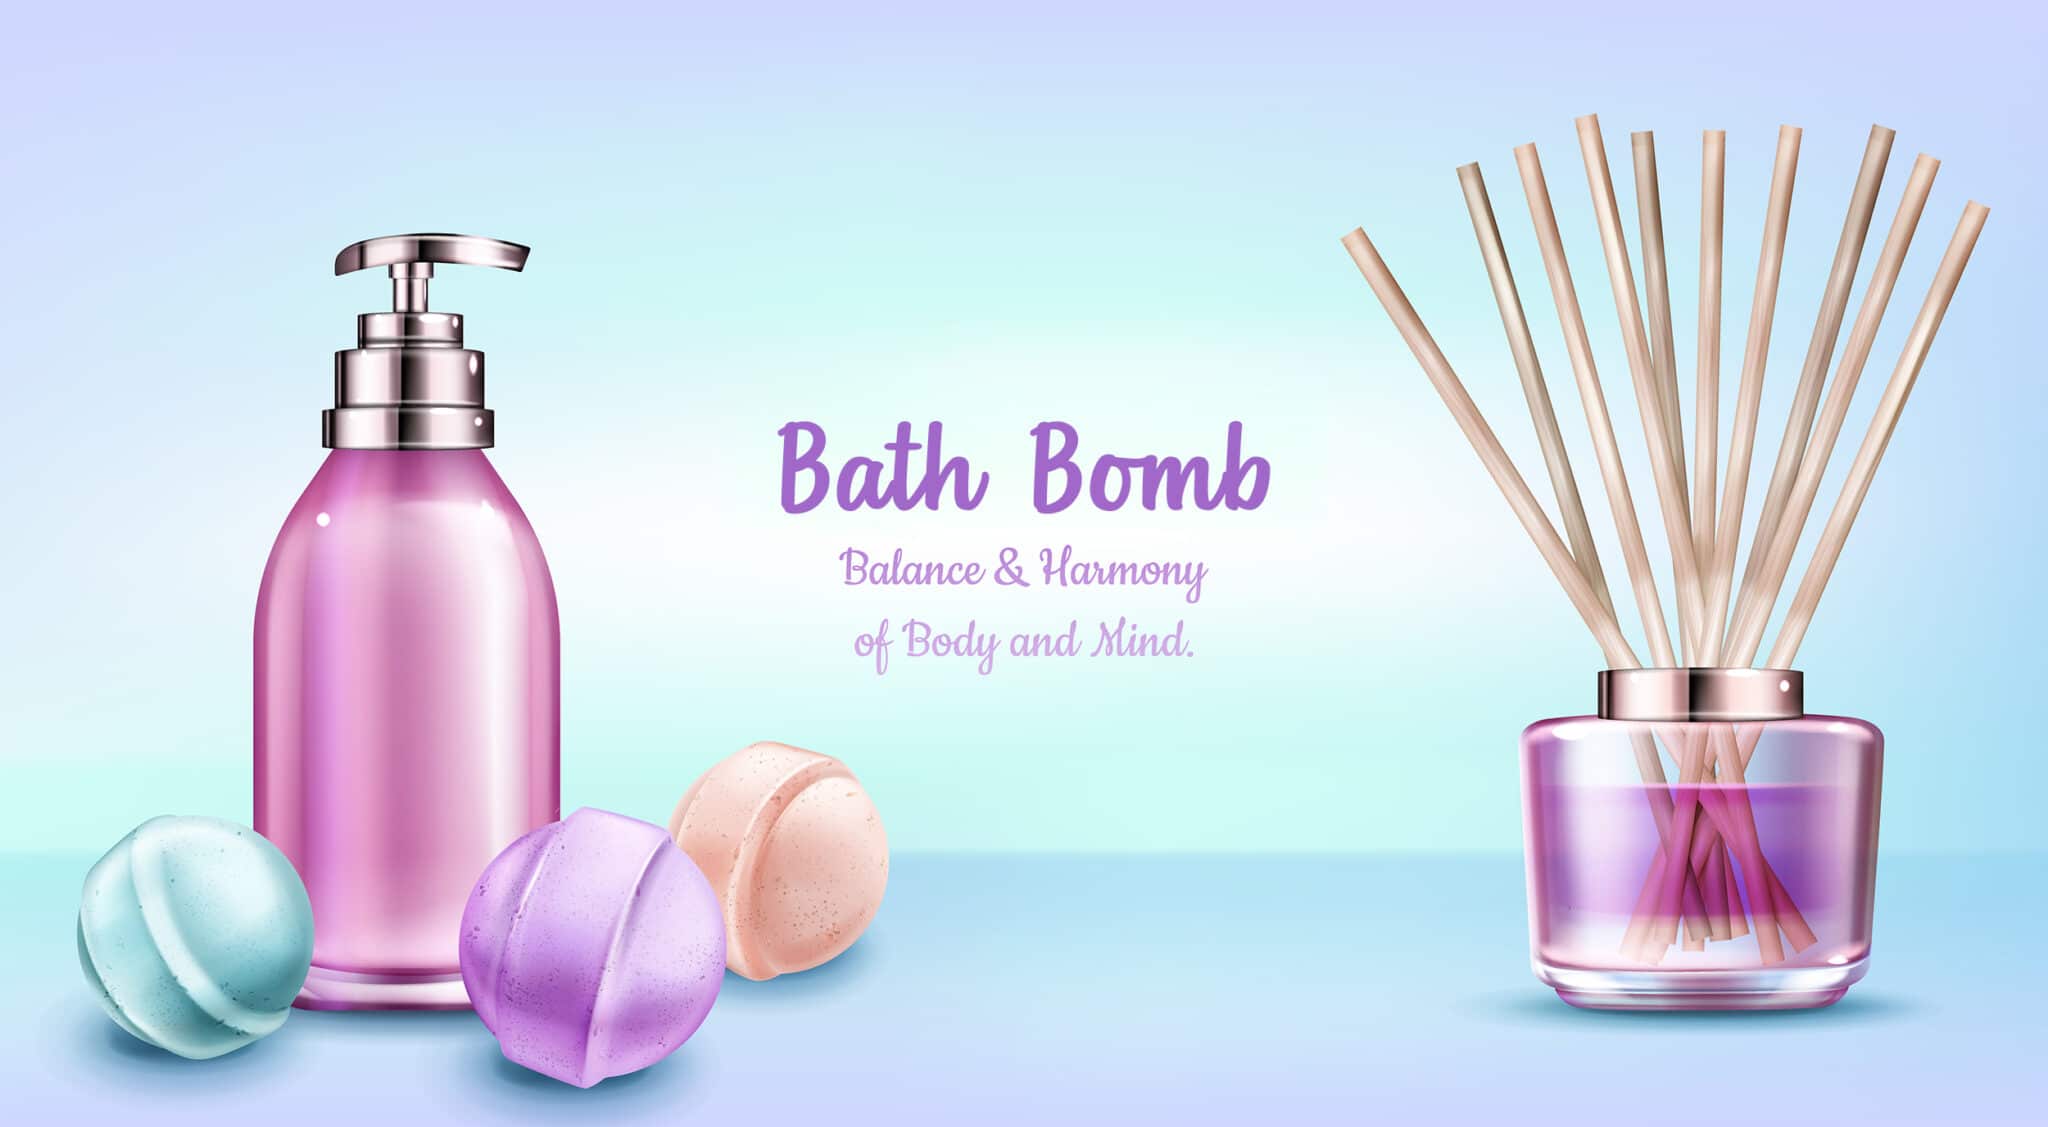 How To Use A Bath Bomb